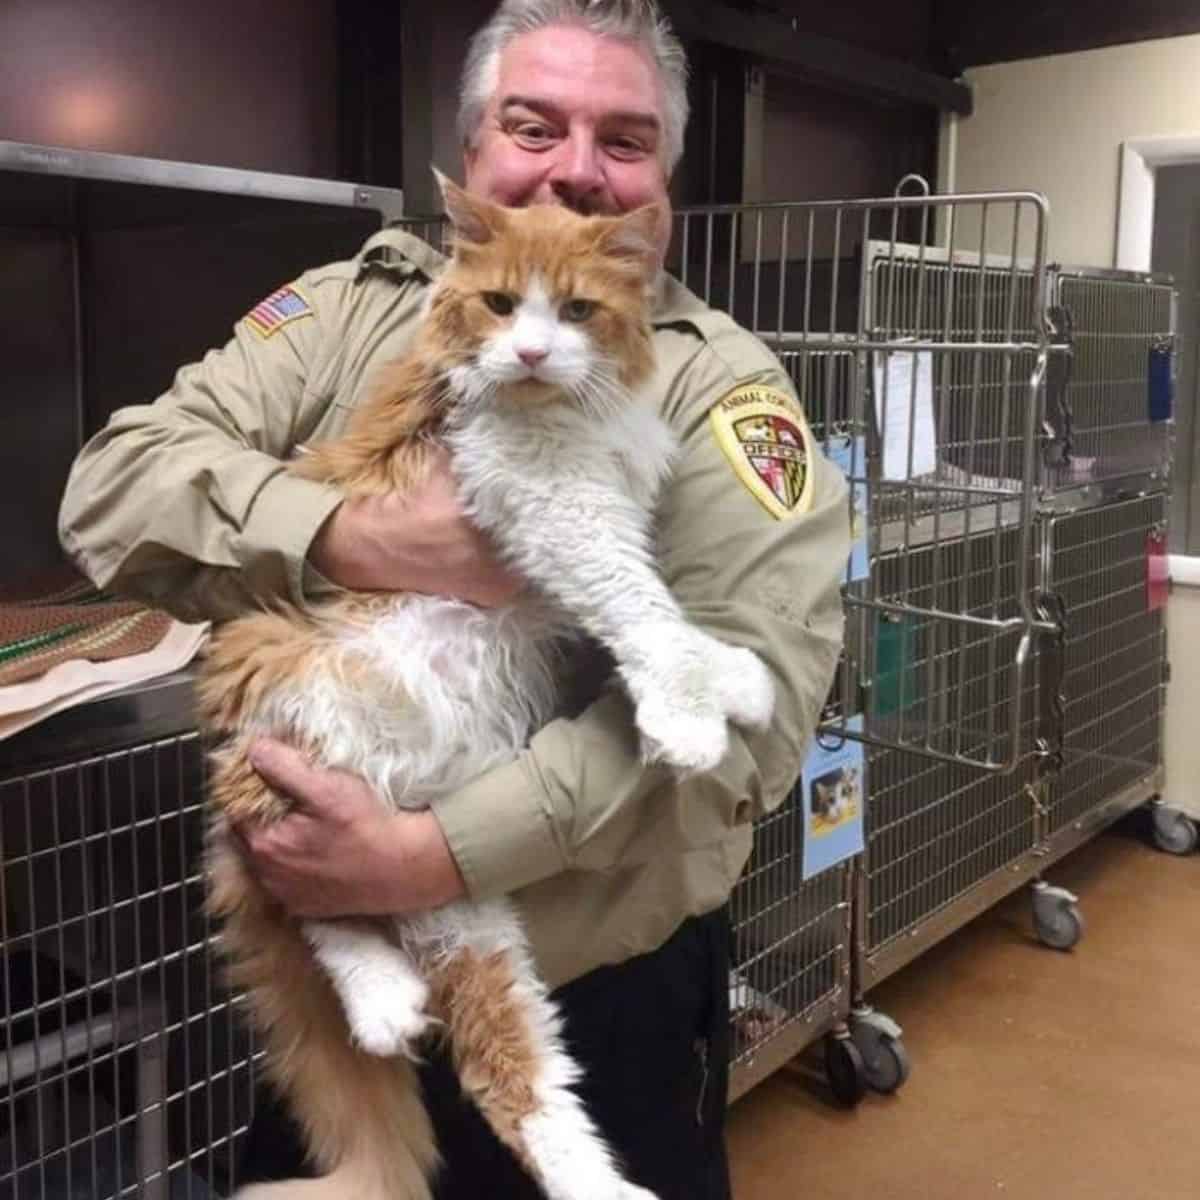 police officer holding giant cat